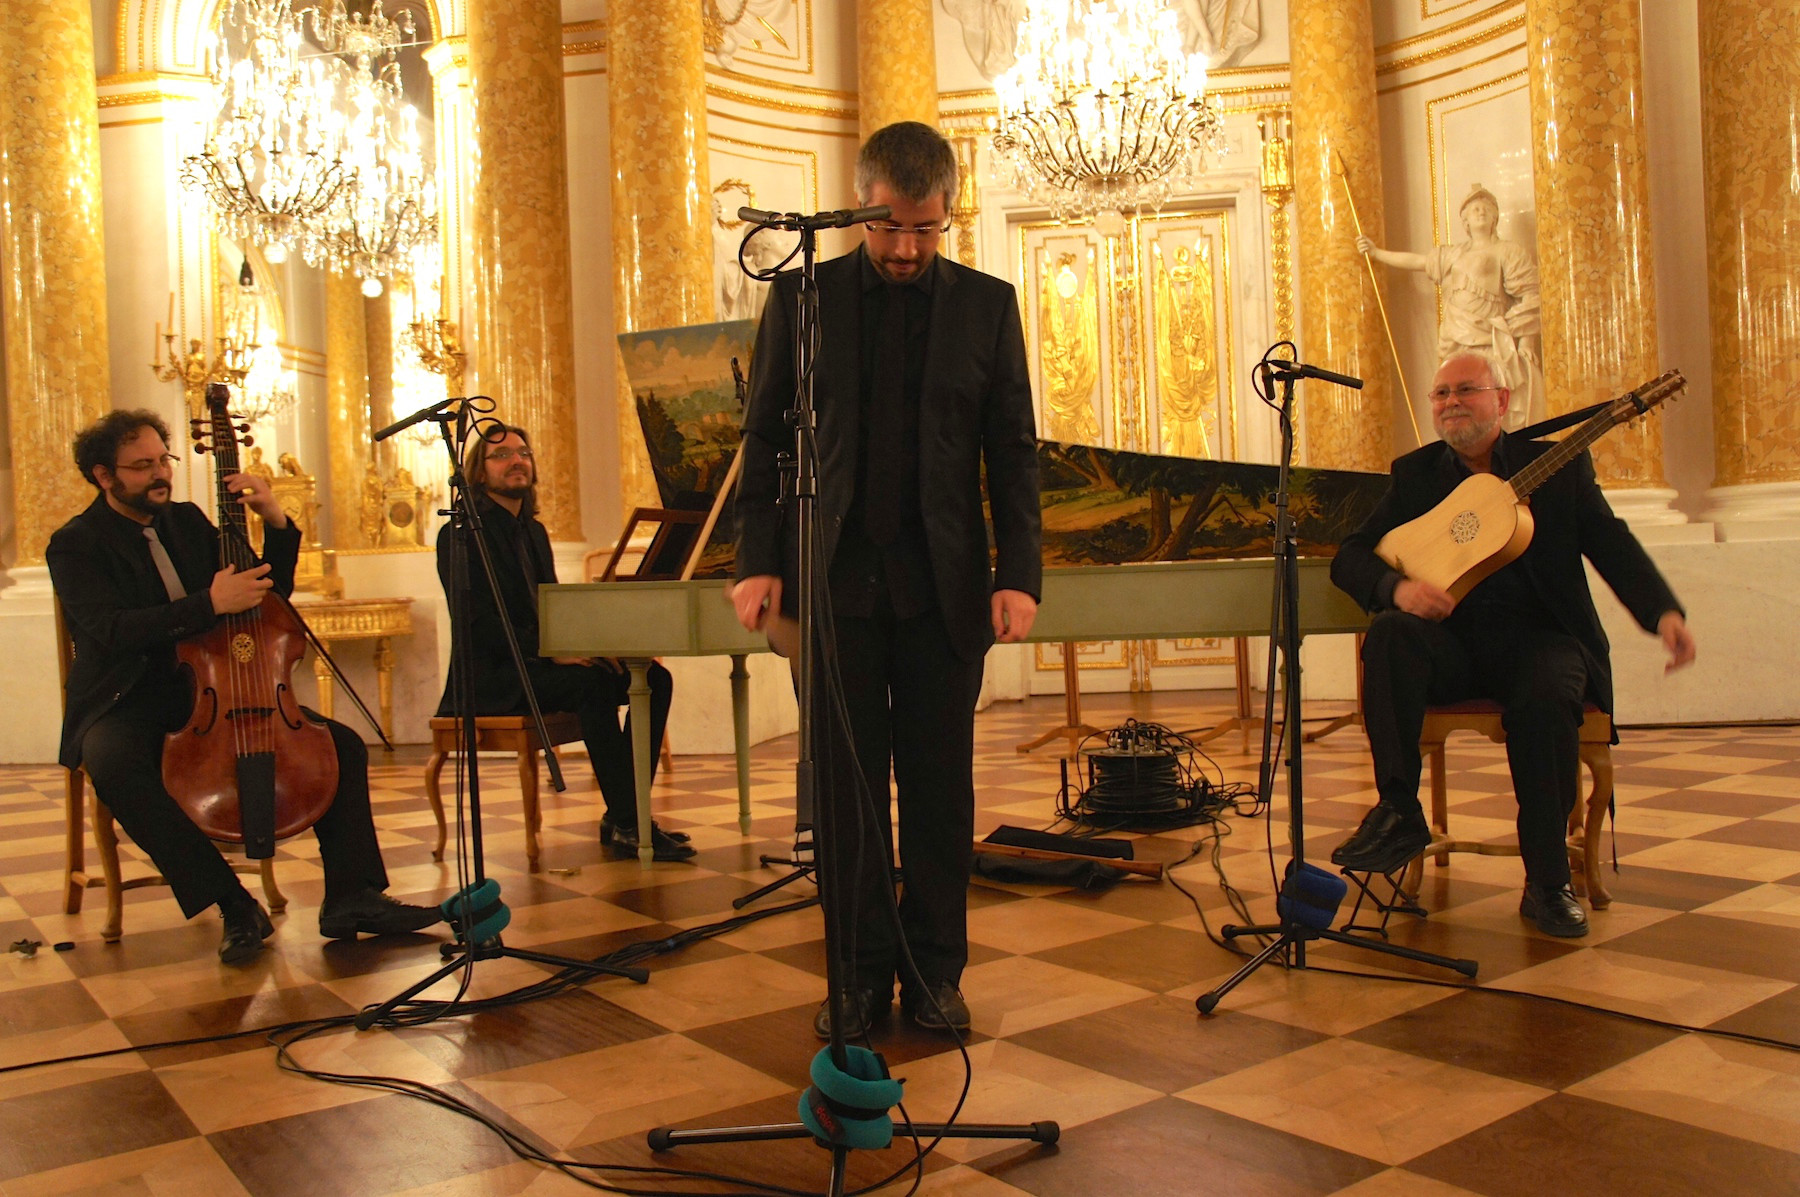 Concert in Warsaw Music Encounters 2014. Rami Alqhai, Javier Núñez, Vicente Parrilla & Juan Carlos Rivera